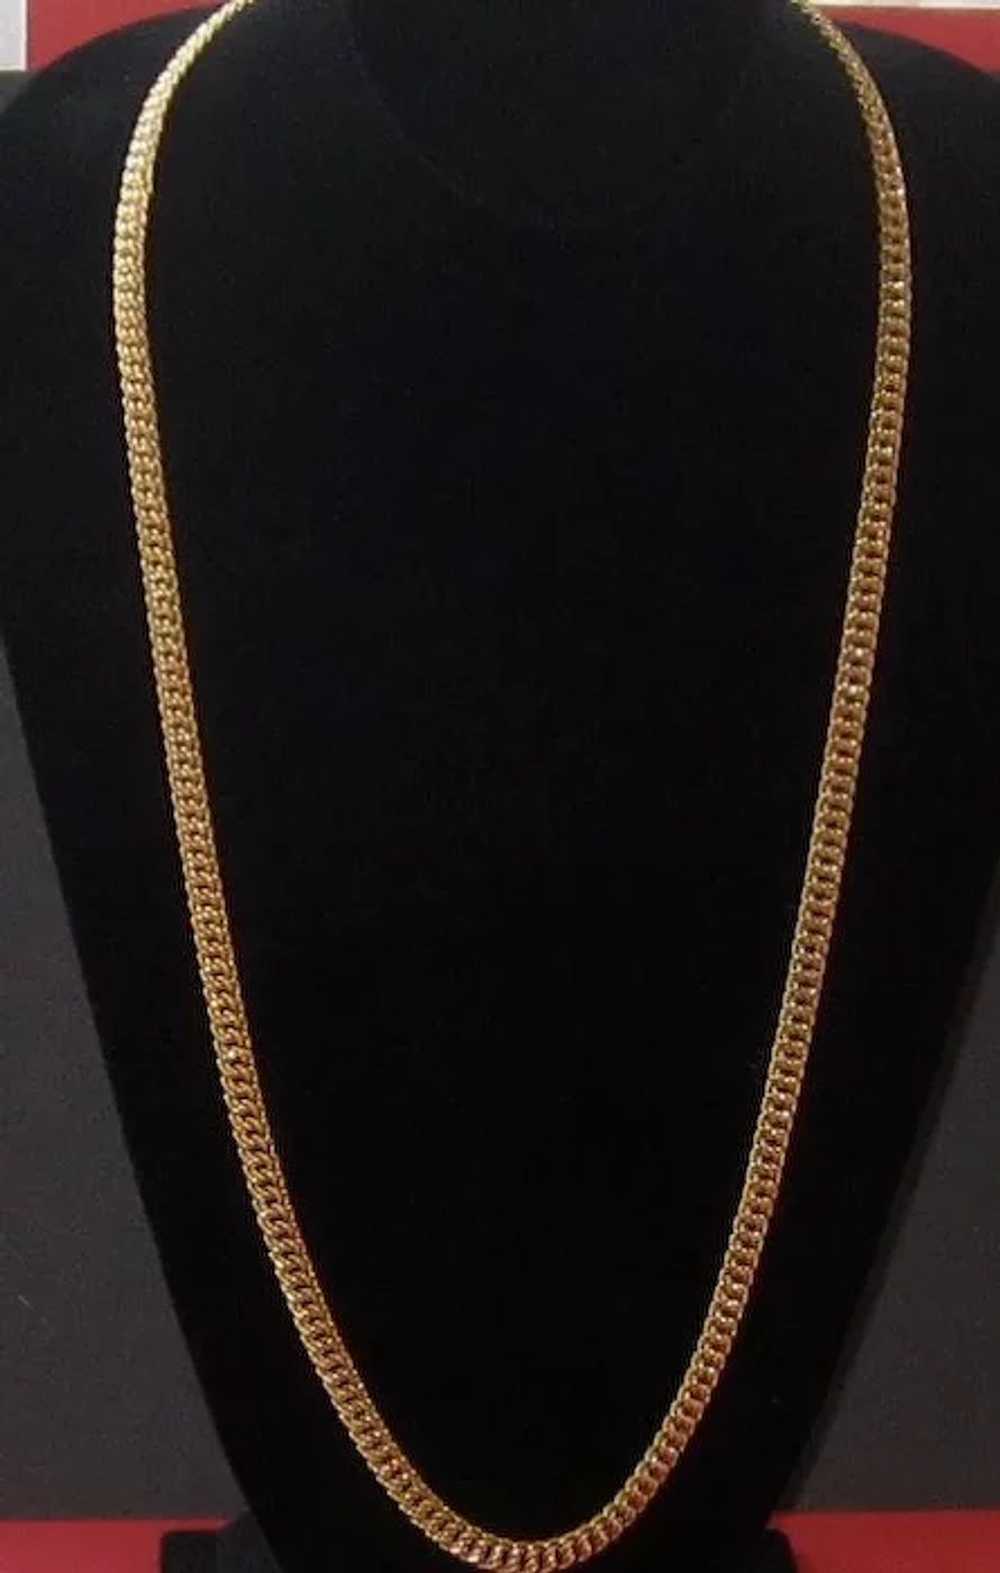 Napier, Chunky Gold Tone Long Necklace - image 2